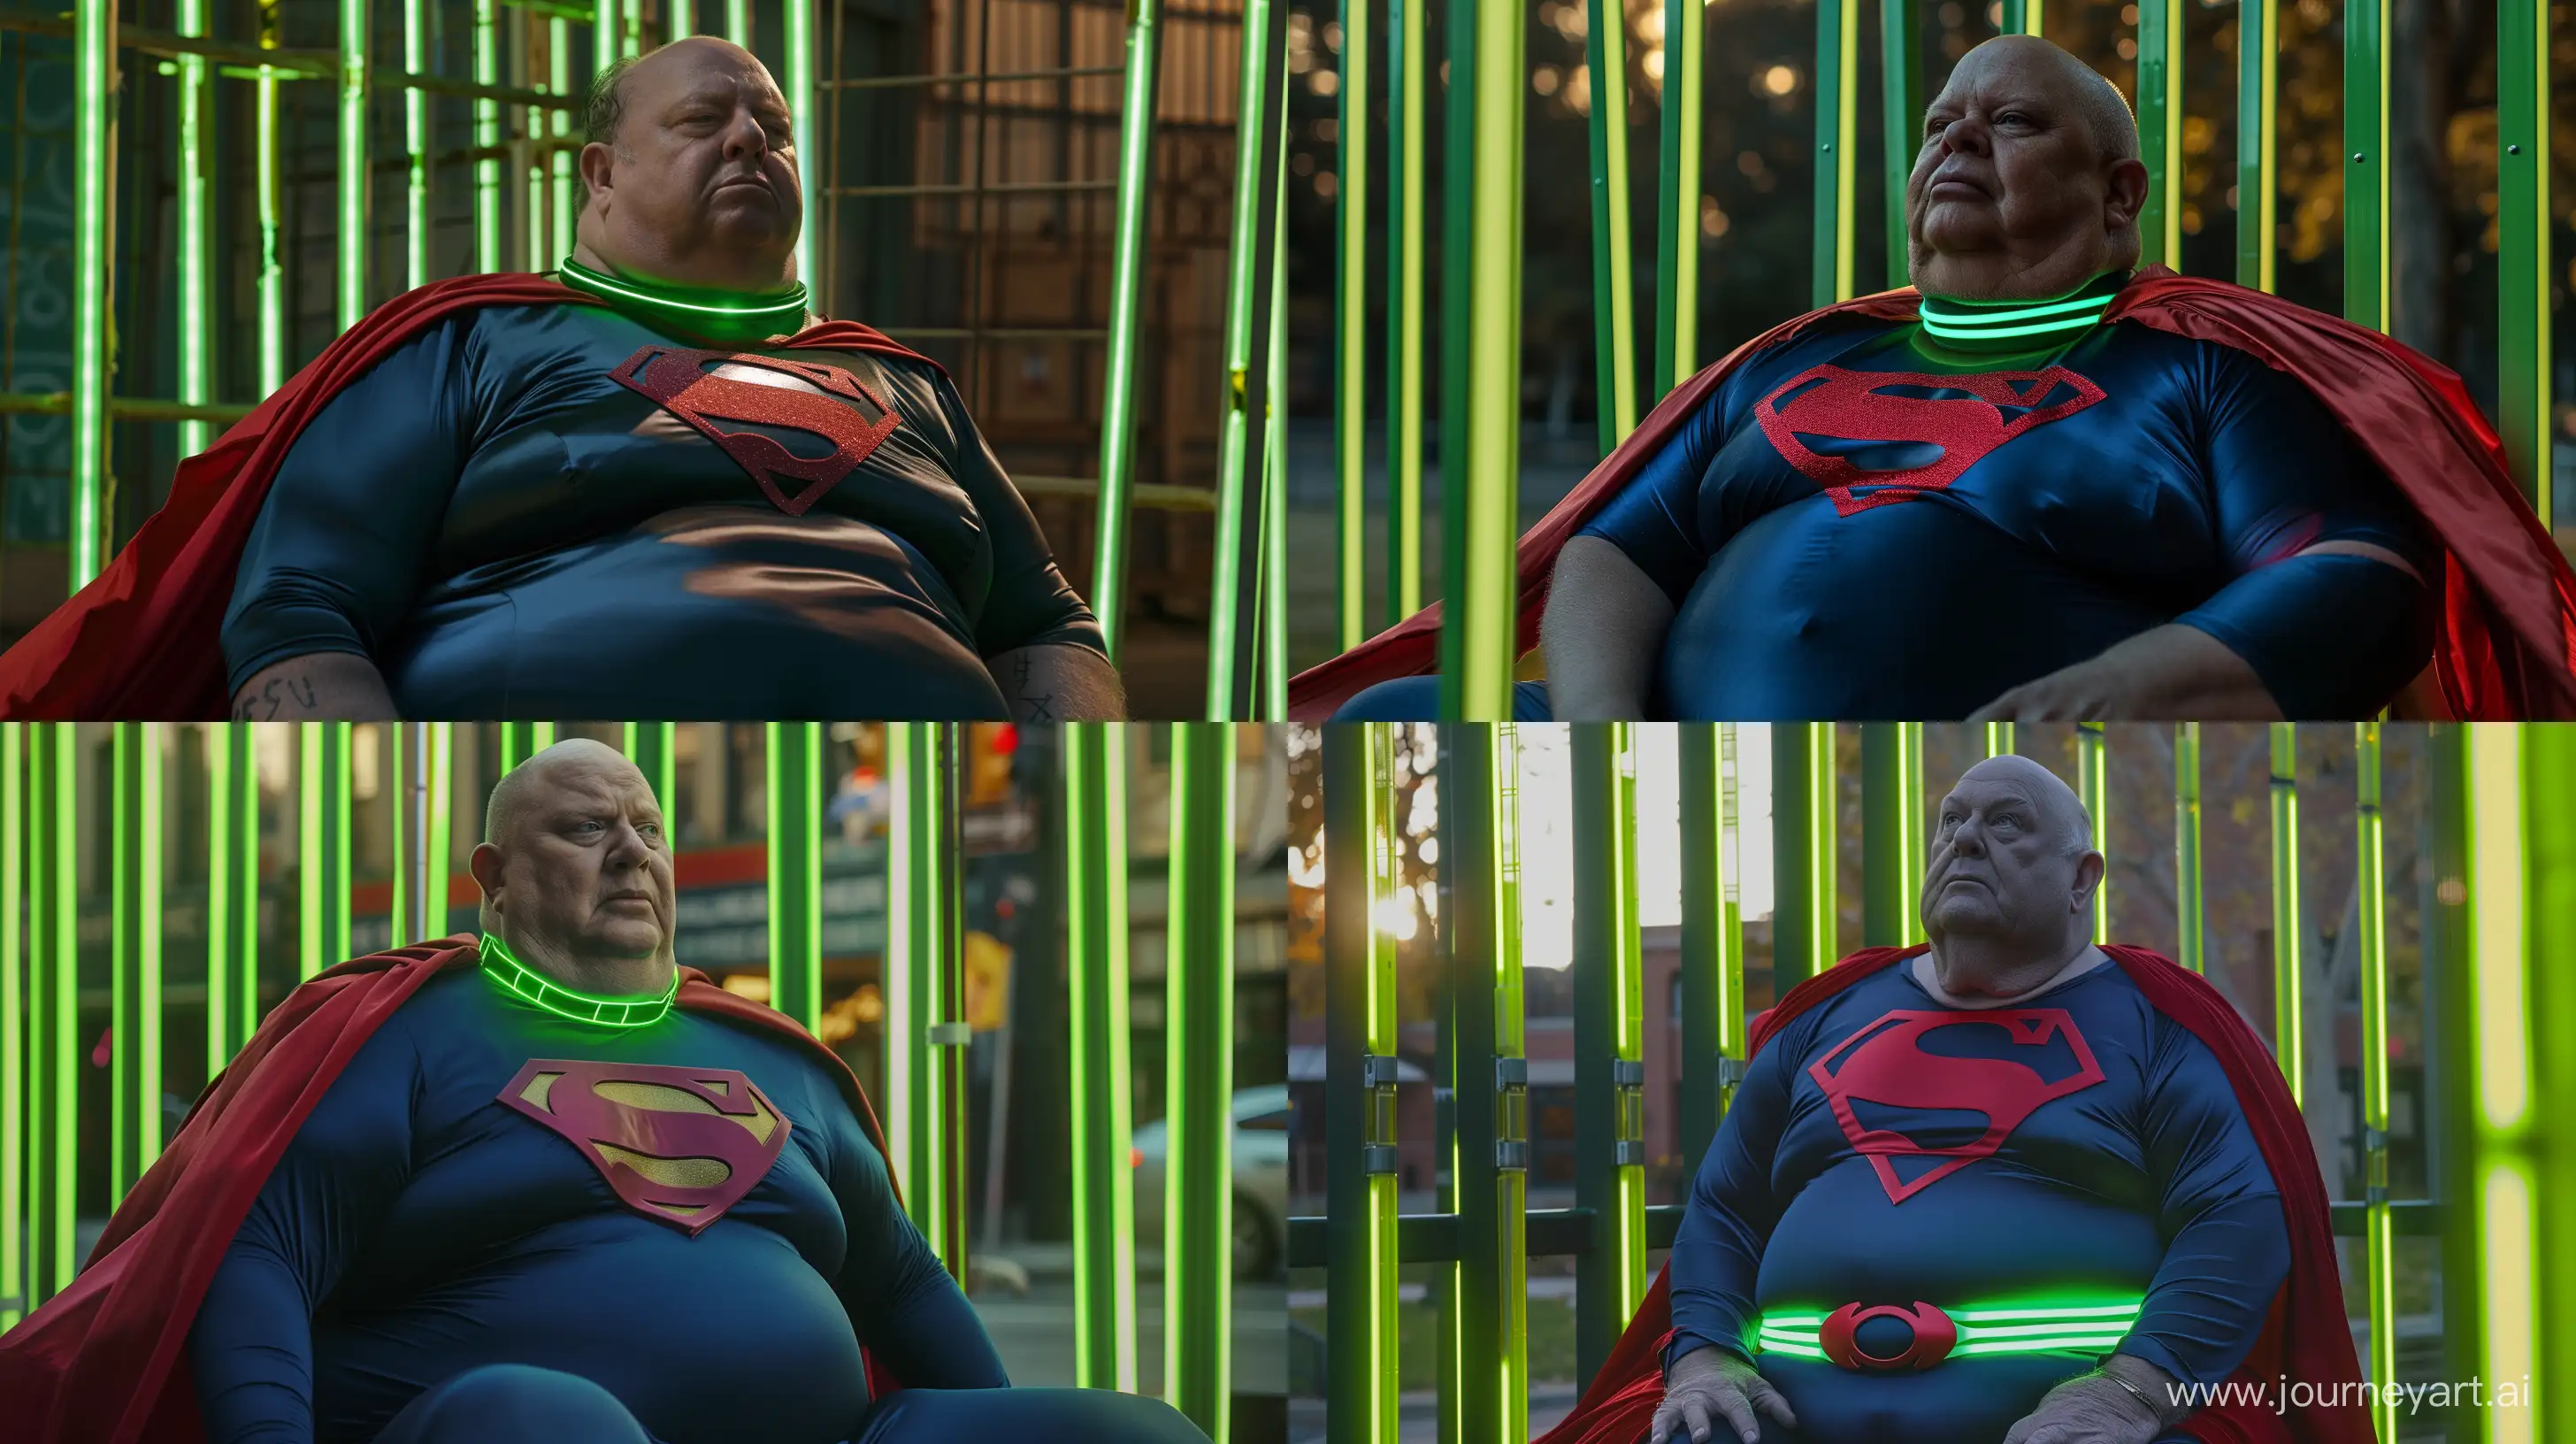 Elderly-Superman-in-Neon-Environment